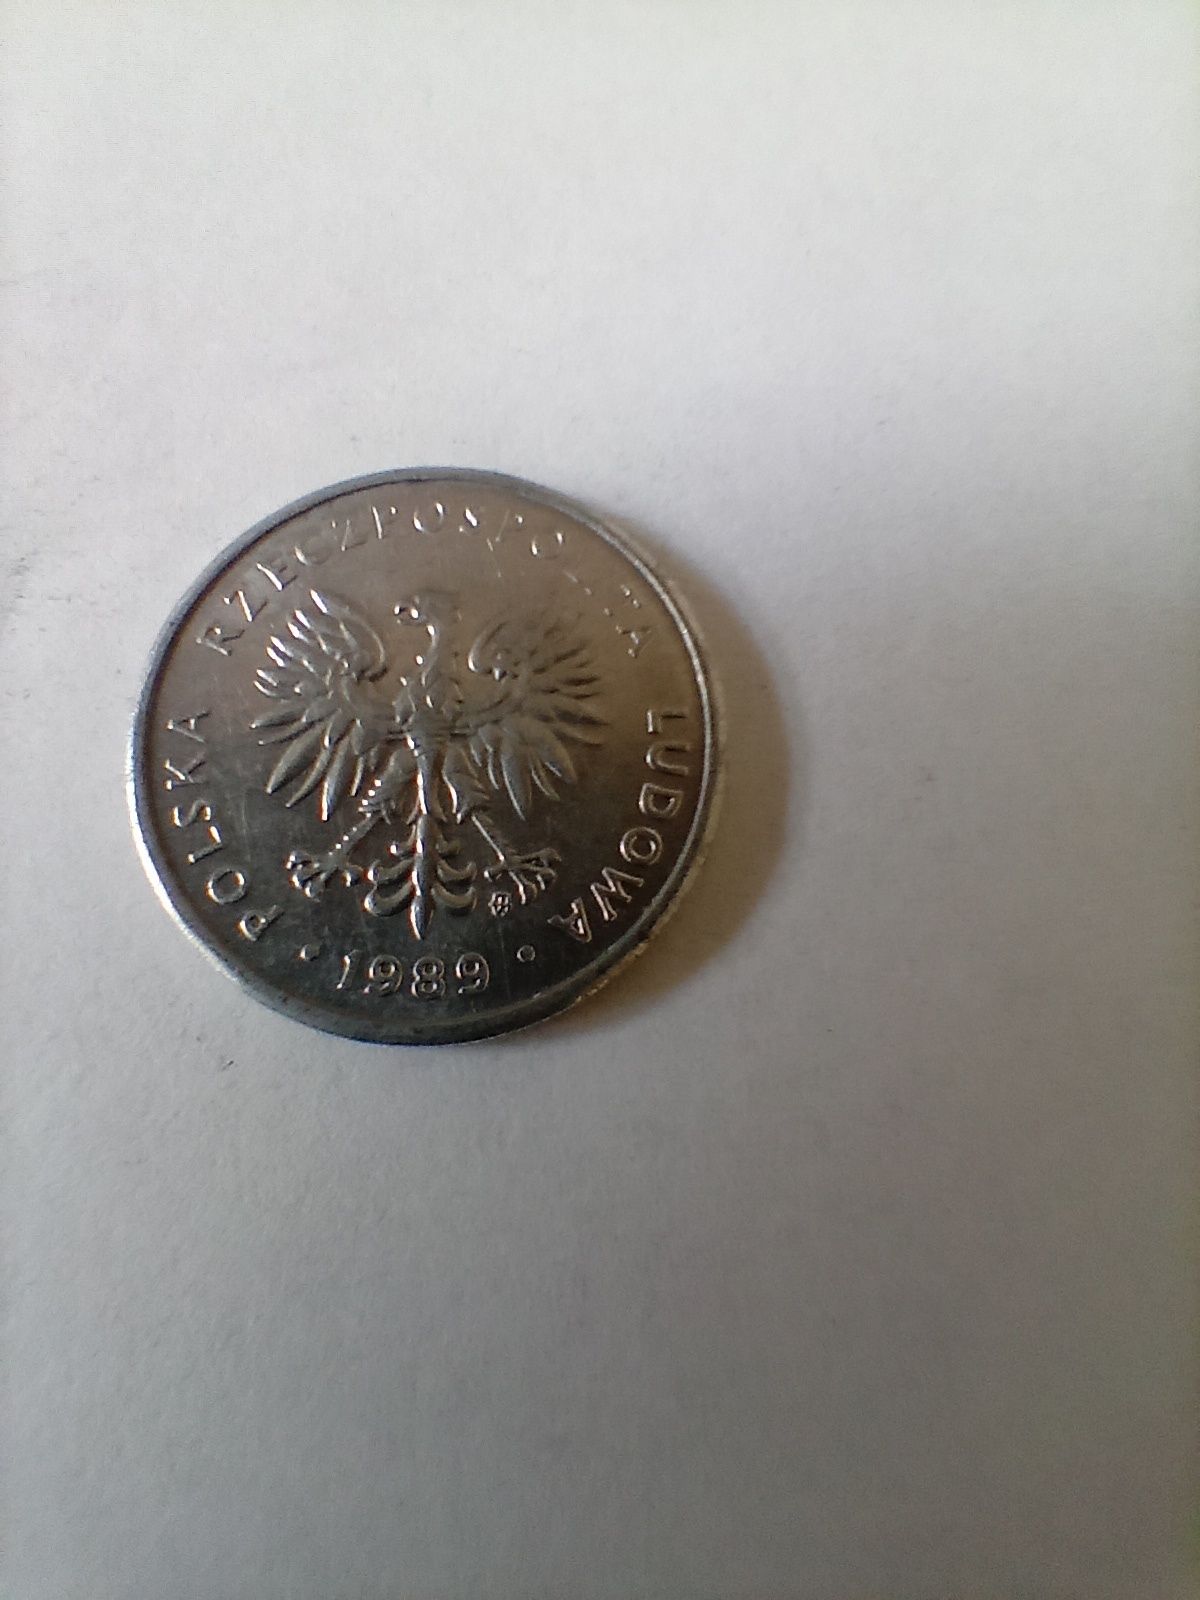 5 zł z 1989 roku moneta